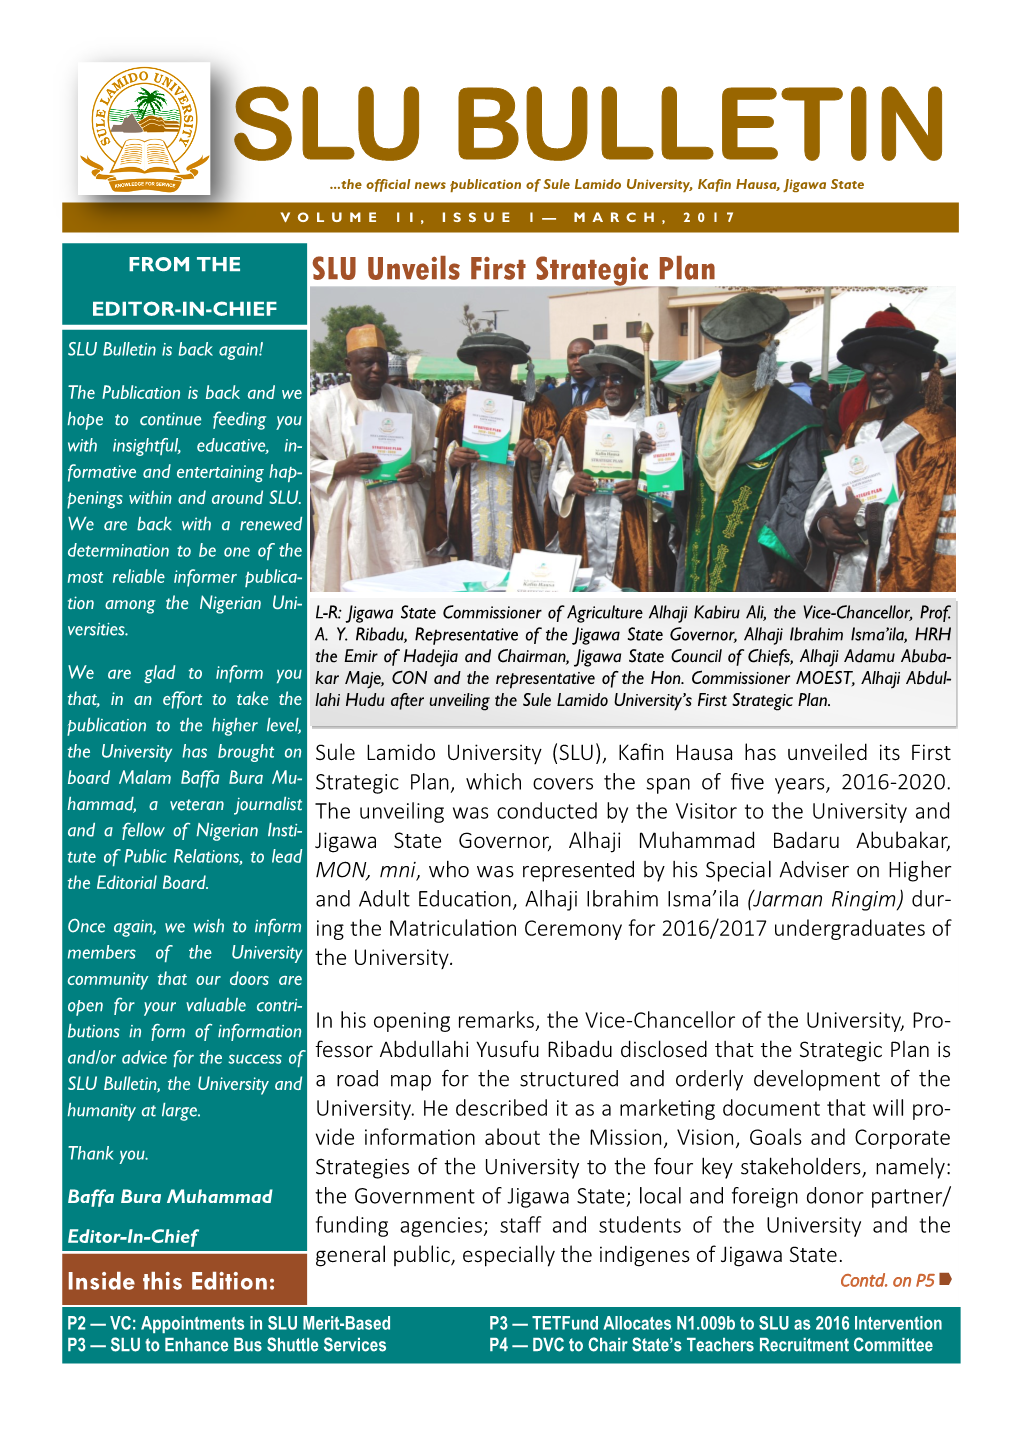 SLU BULLETIN ...The Official News Publication of Sule Lamido University, Kafin Hausa, Jigawa State